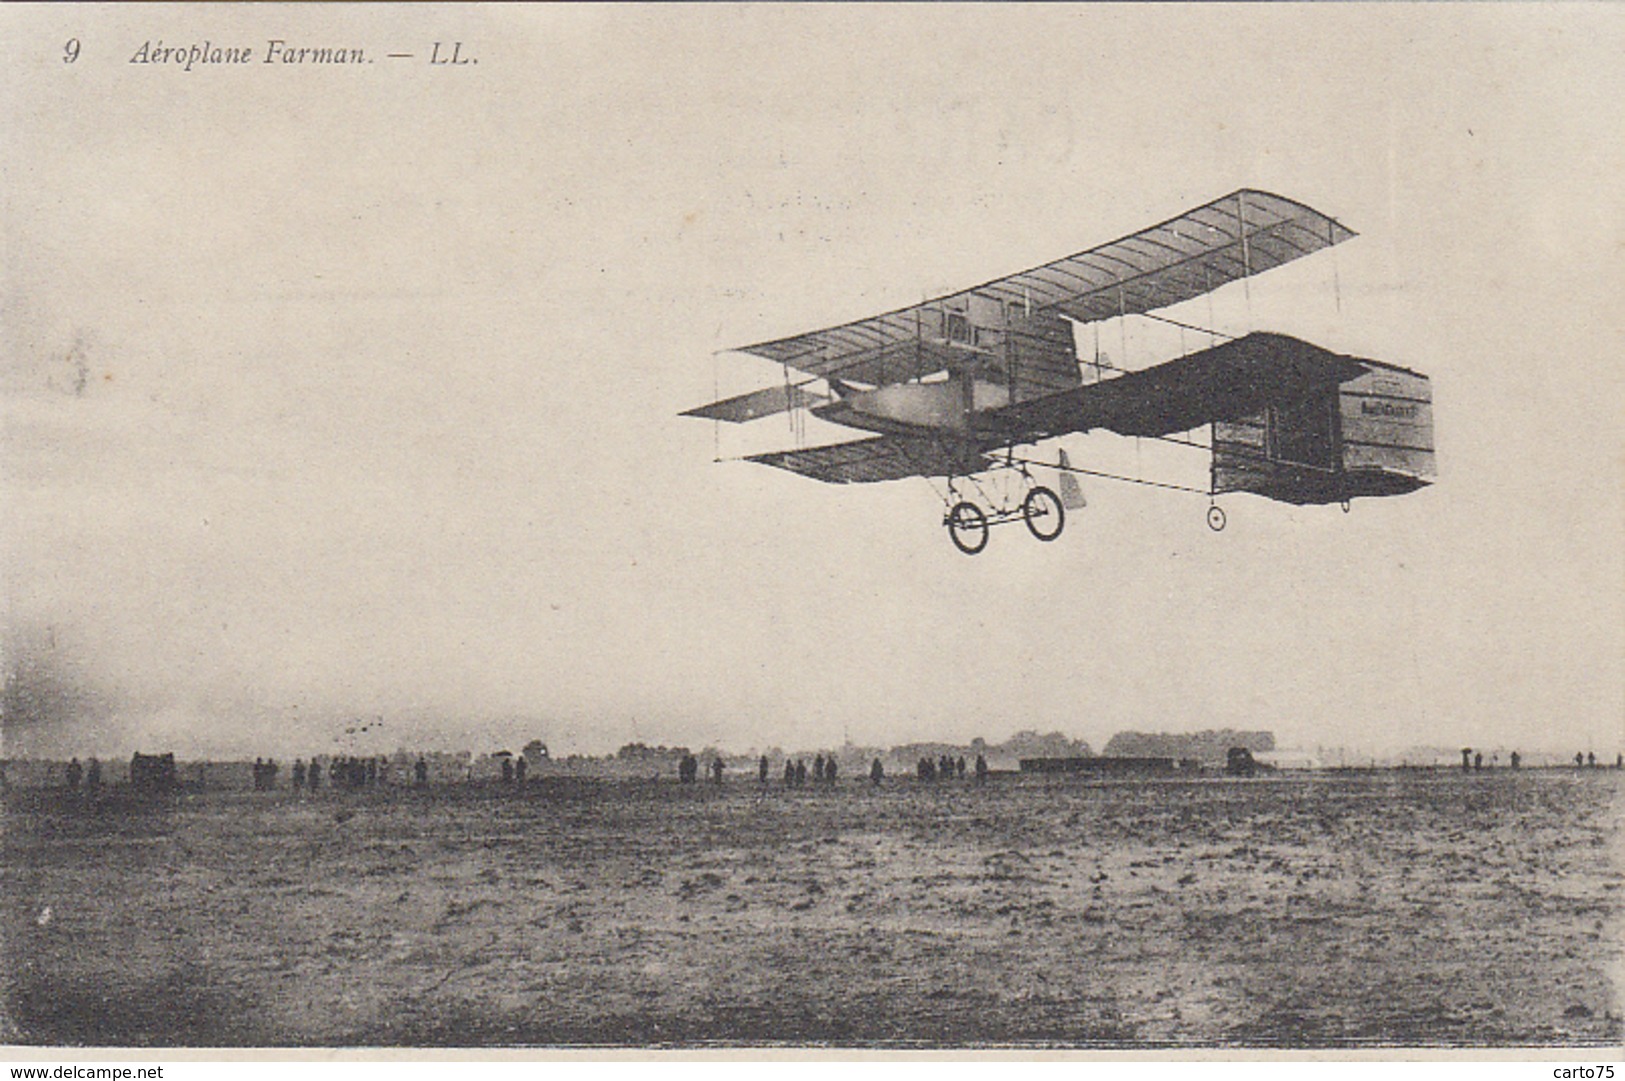 Aviation - Avion Biplan Farmann - ....-1914: Precursors